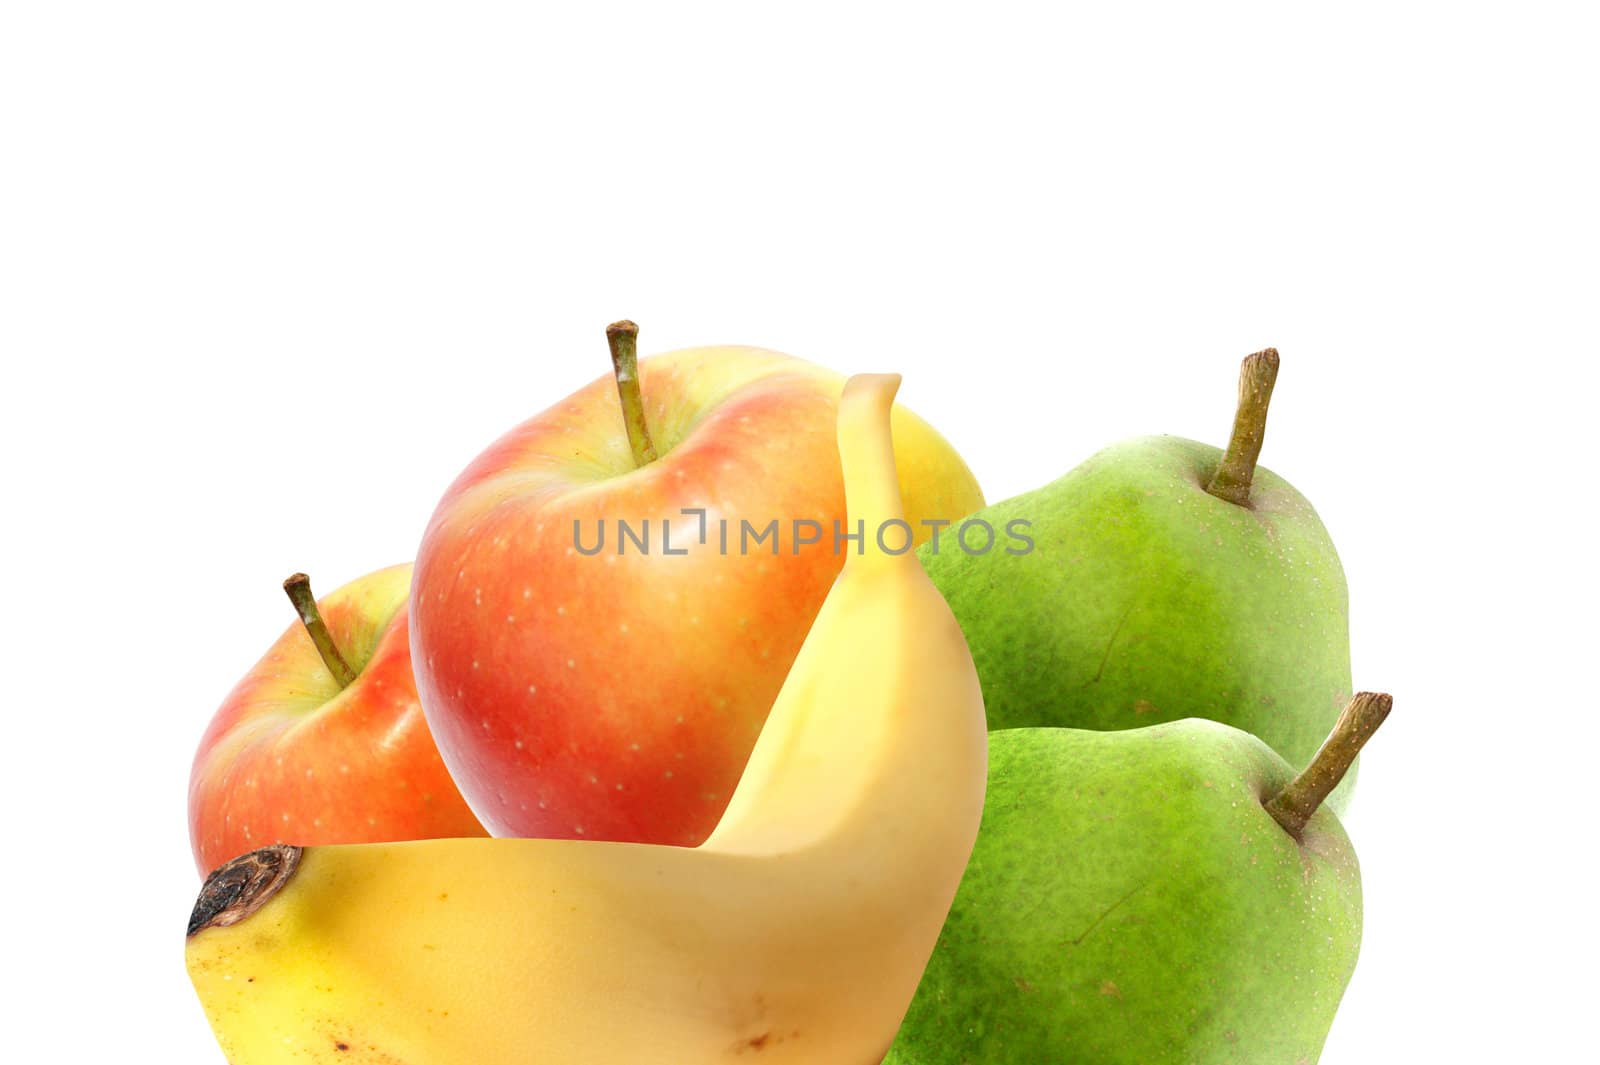 Apple, pear, banana by leeser